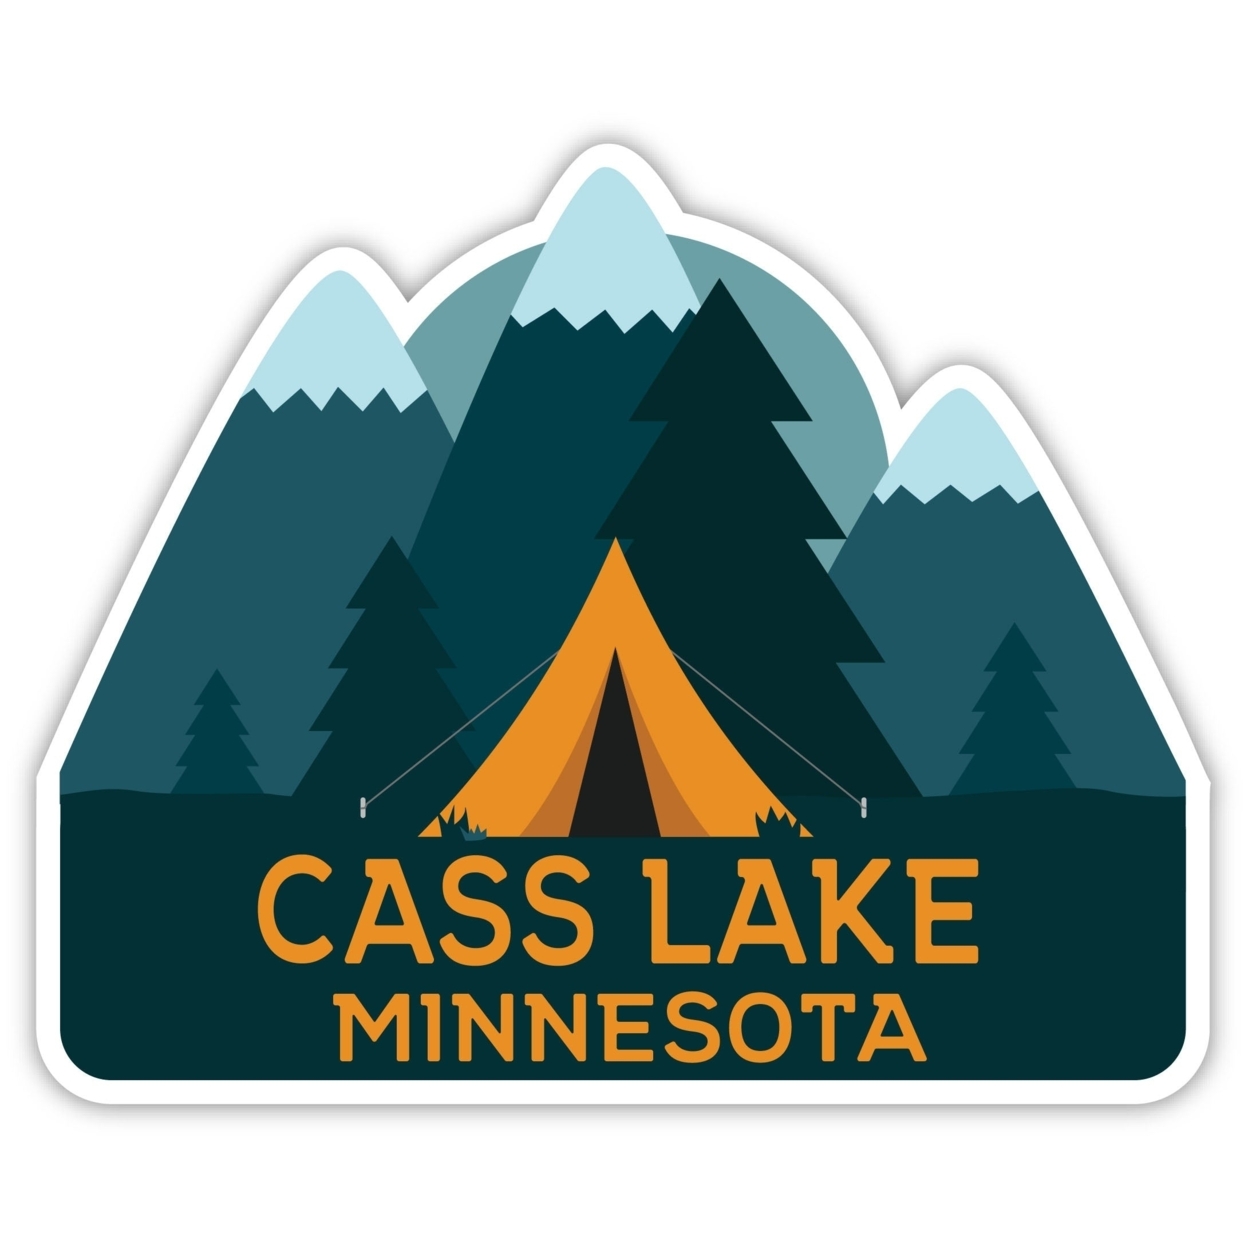 Cass Lake Minnesota Souvenir Decorative Stickers (Choose Theme And Size) - 4-Pack, 2-Inch, Bear